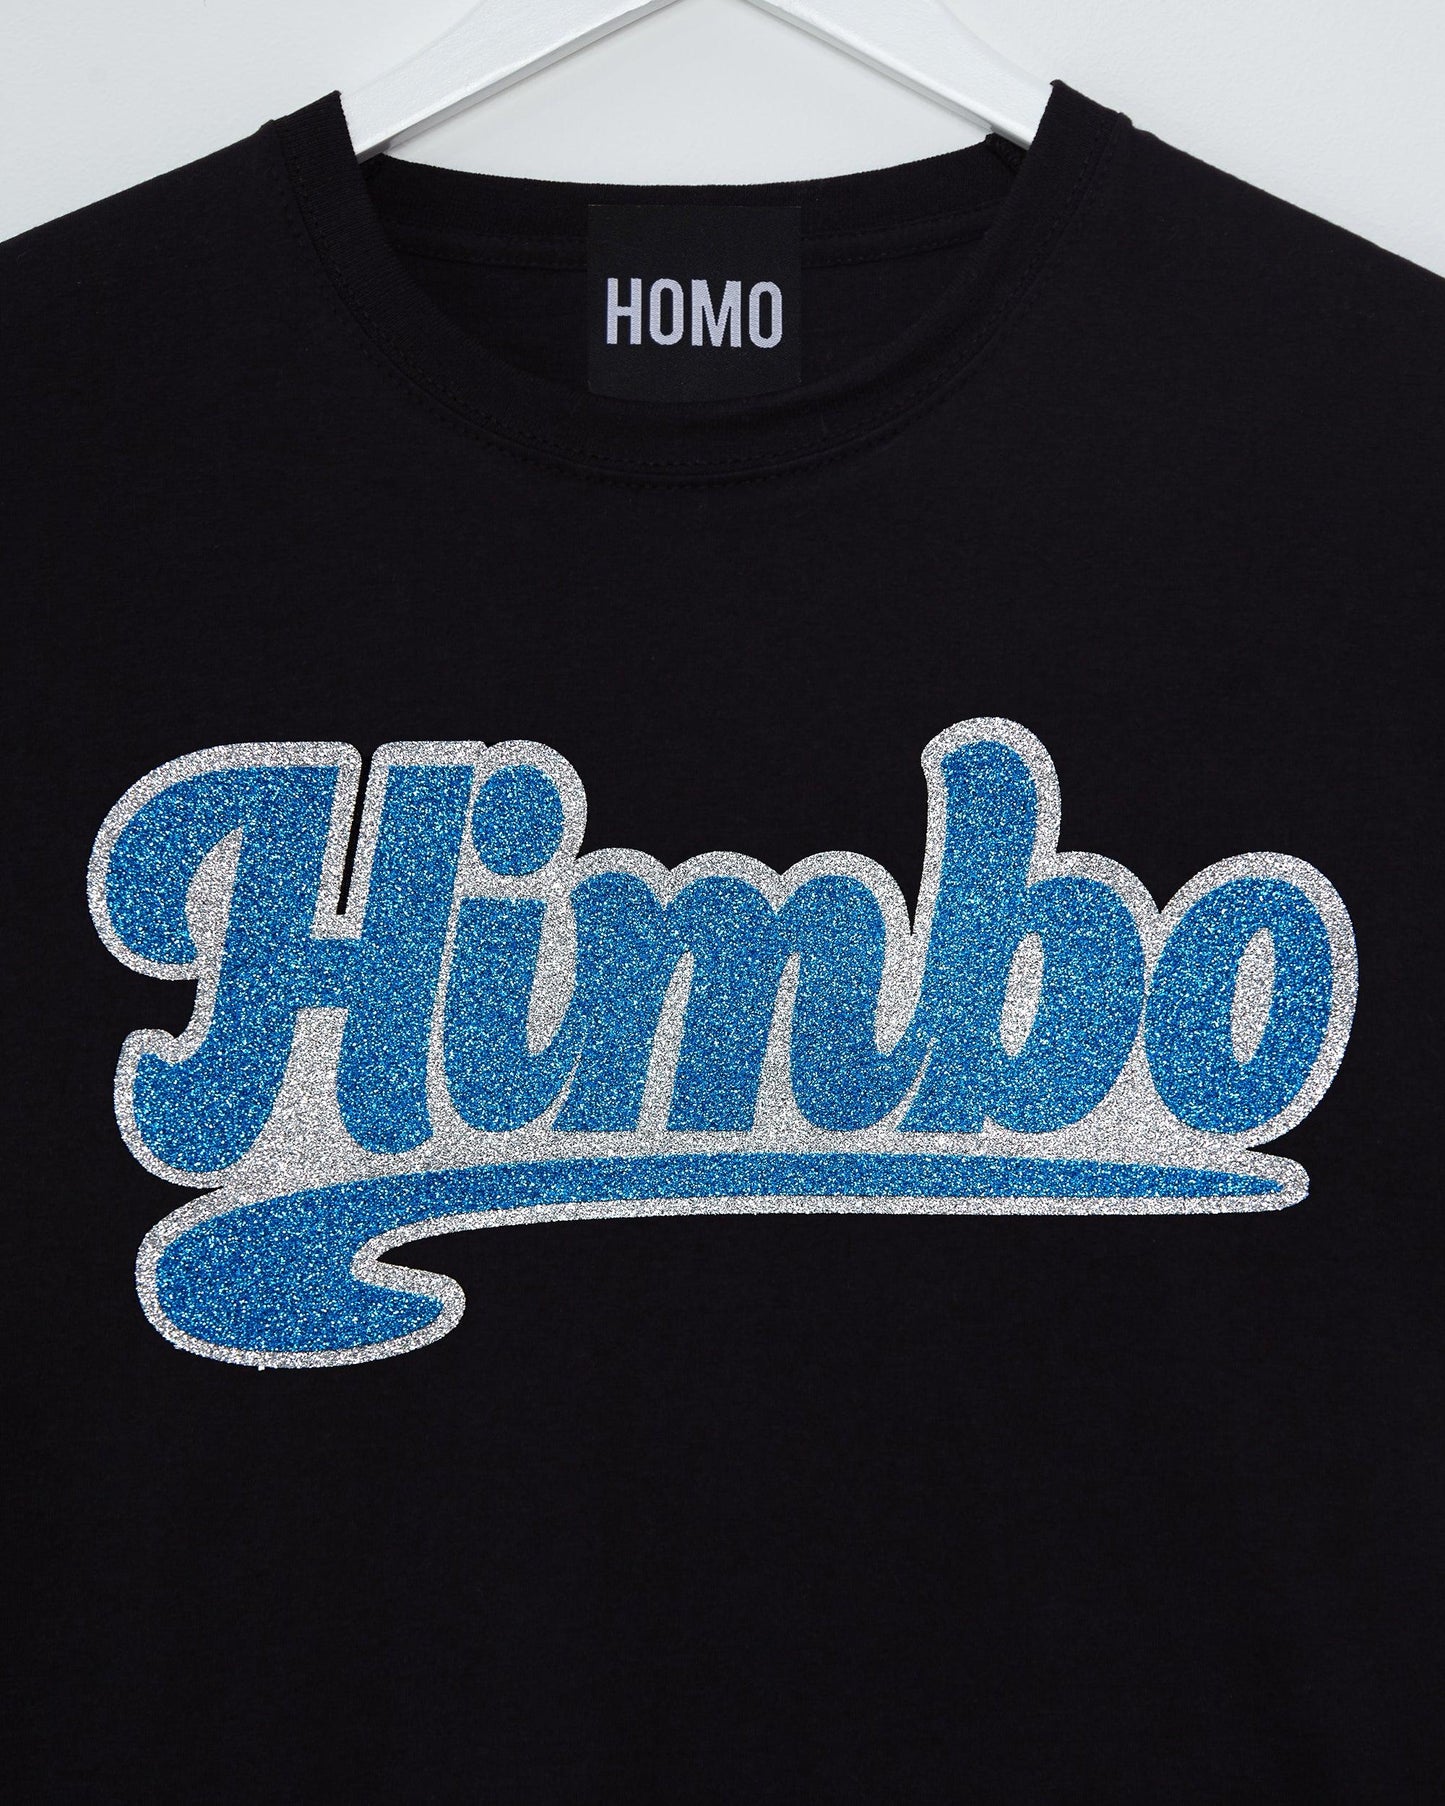 Himbo, blue/silver glitter on black - tee